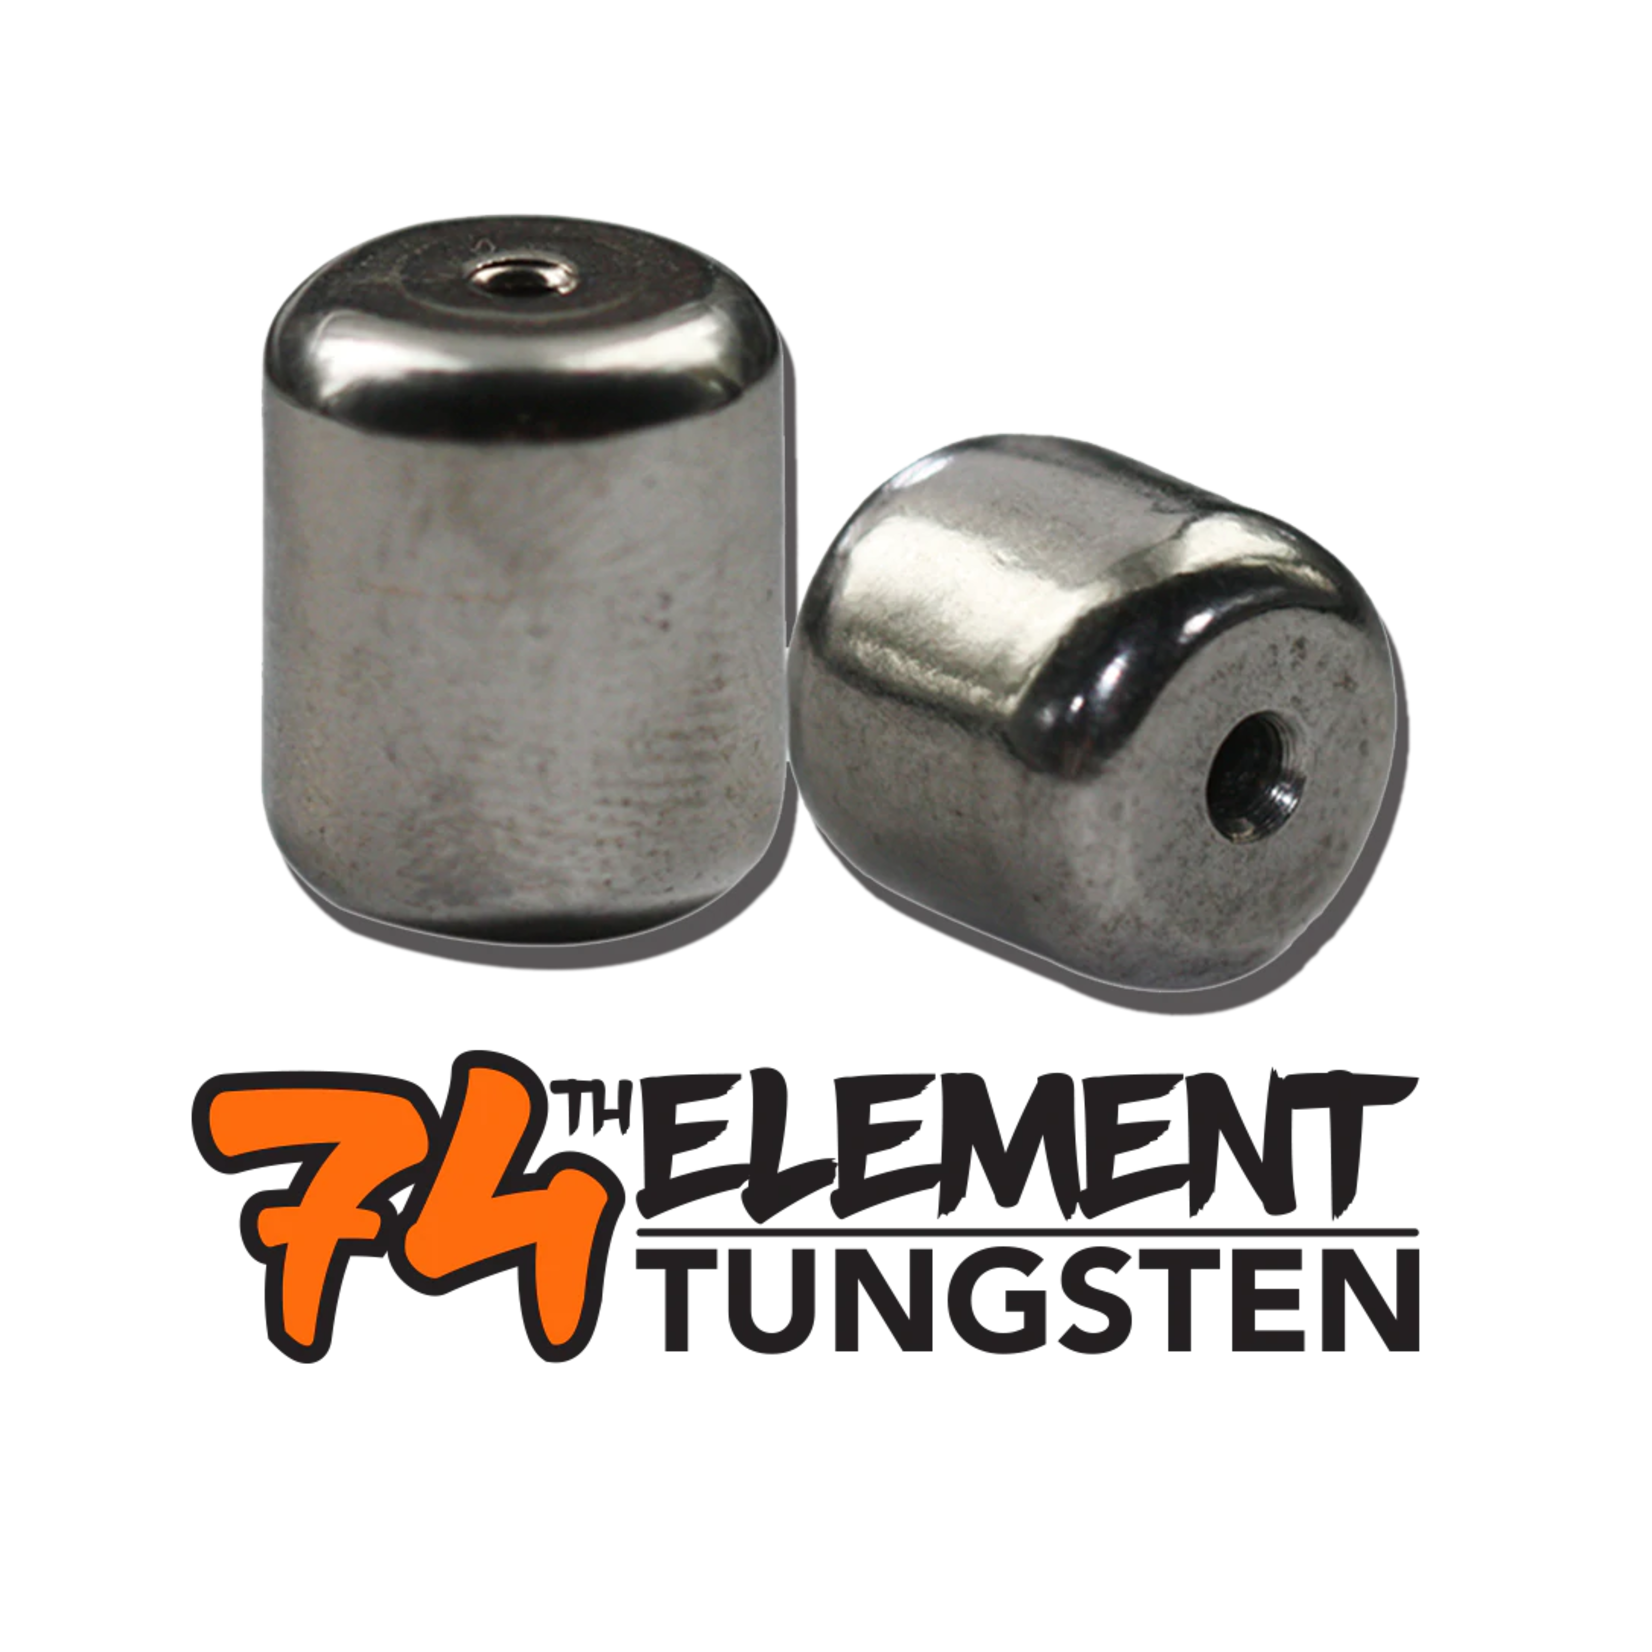 74th Element Tungsten - The Barrel - Boutique l'Archerot